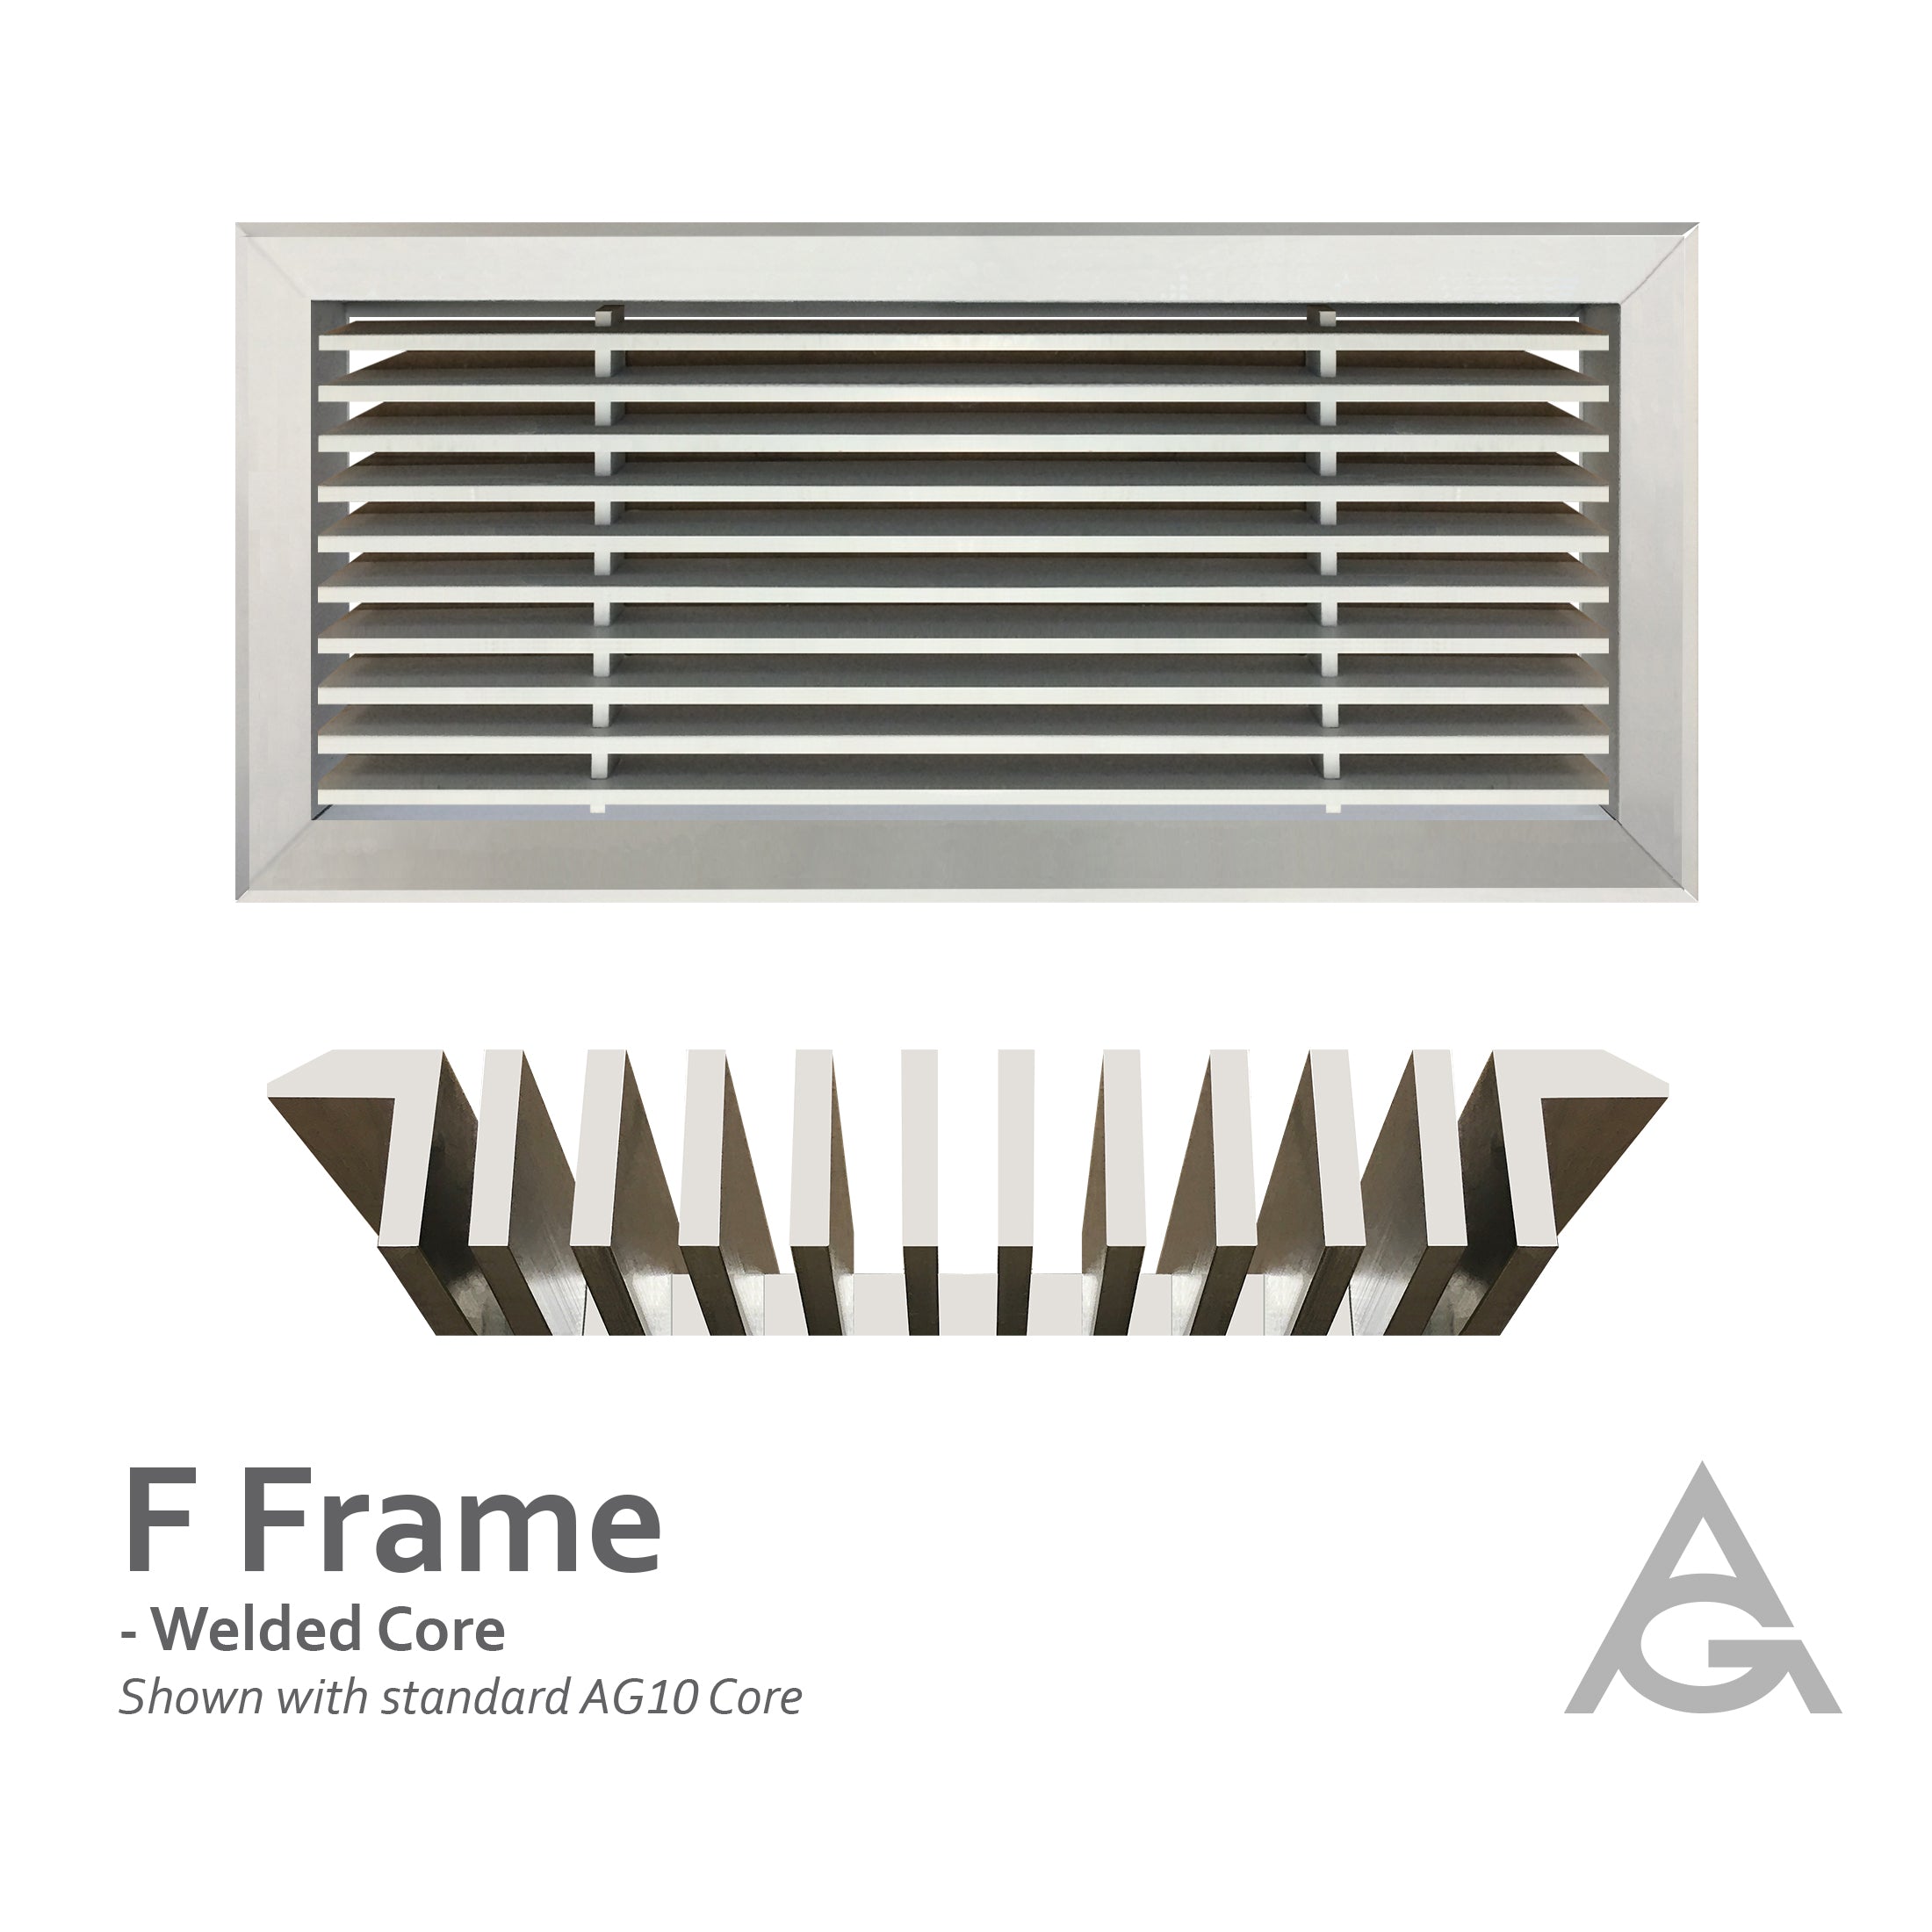 F Frame: Welded Core